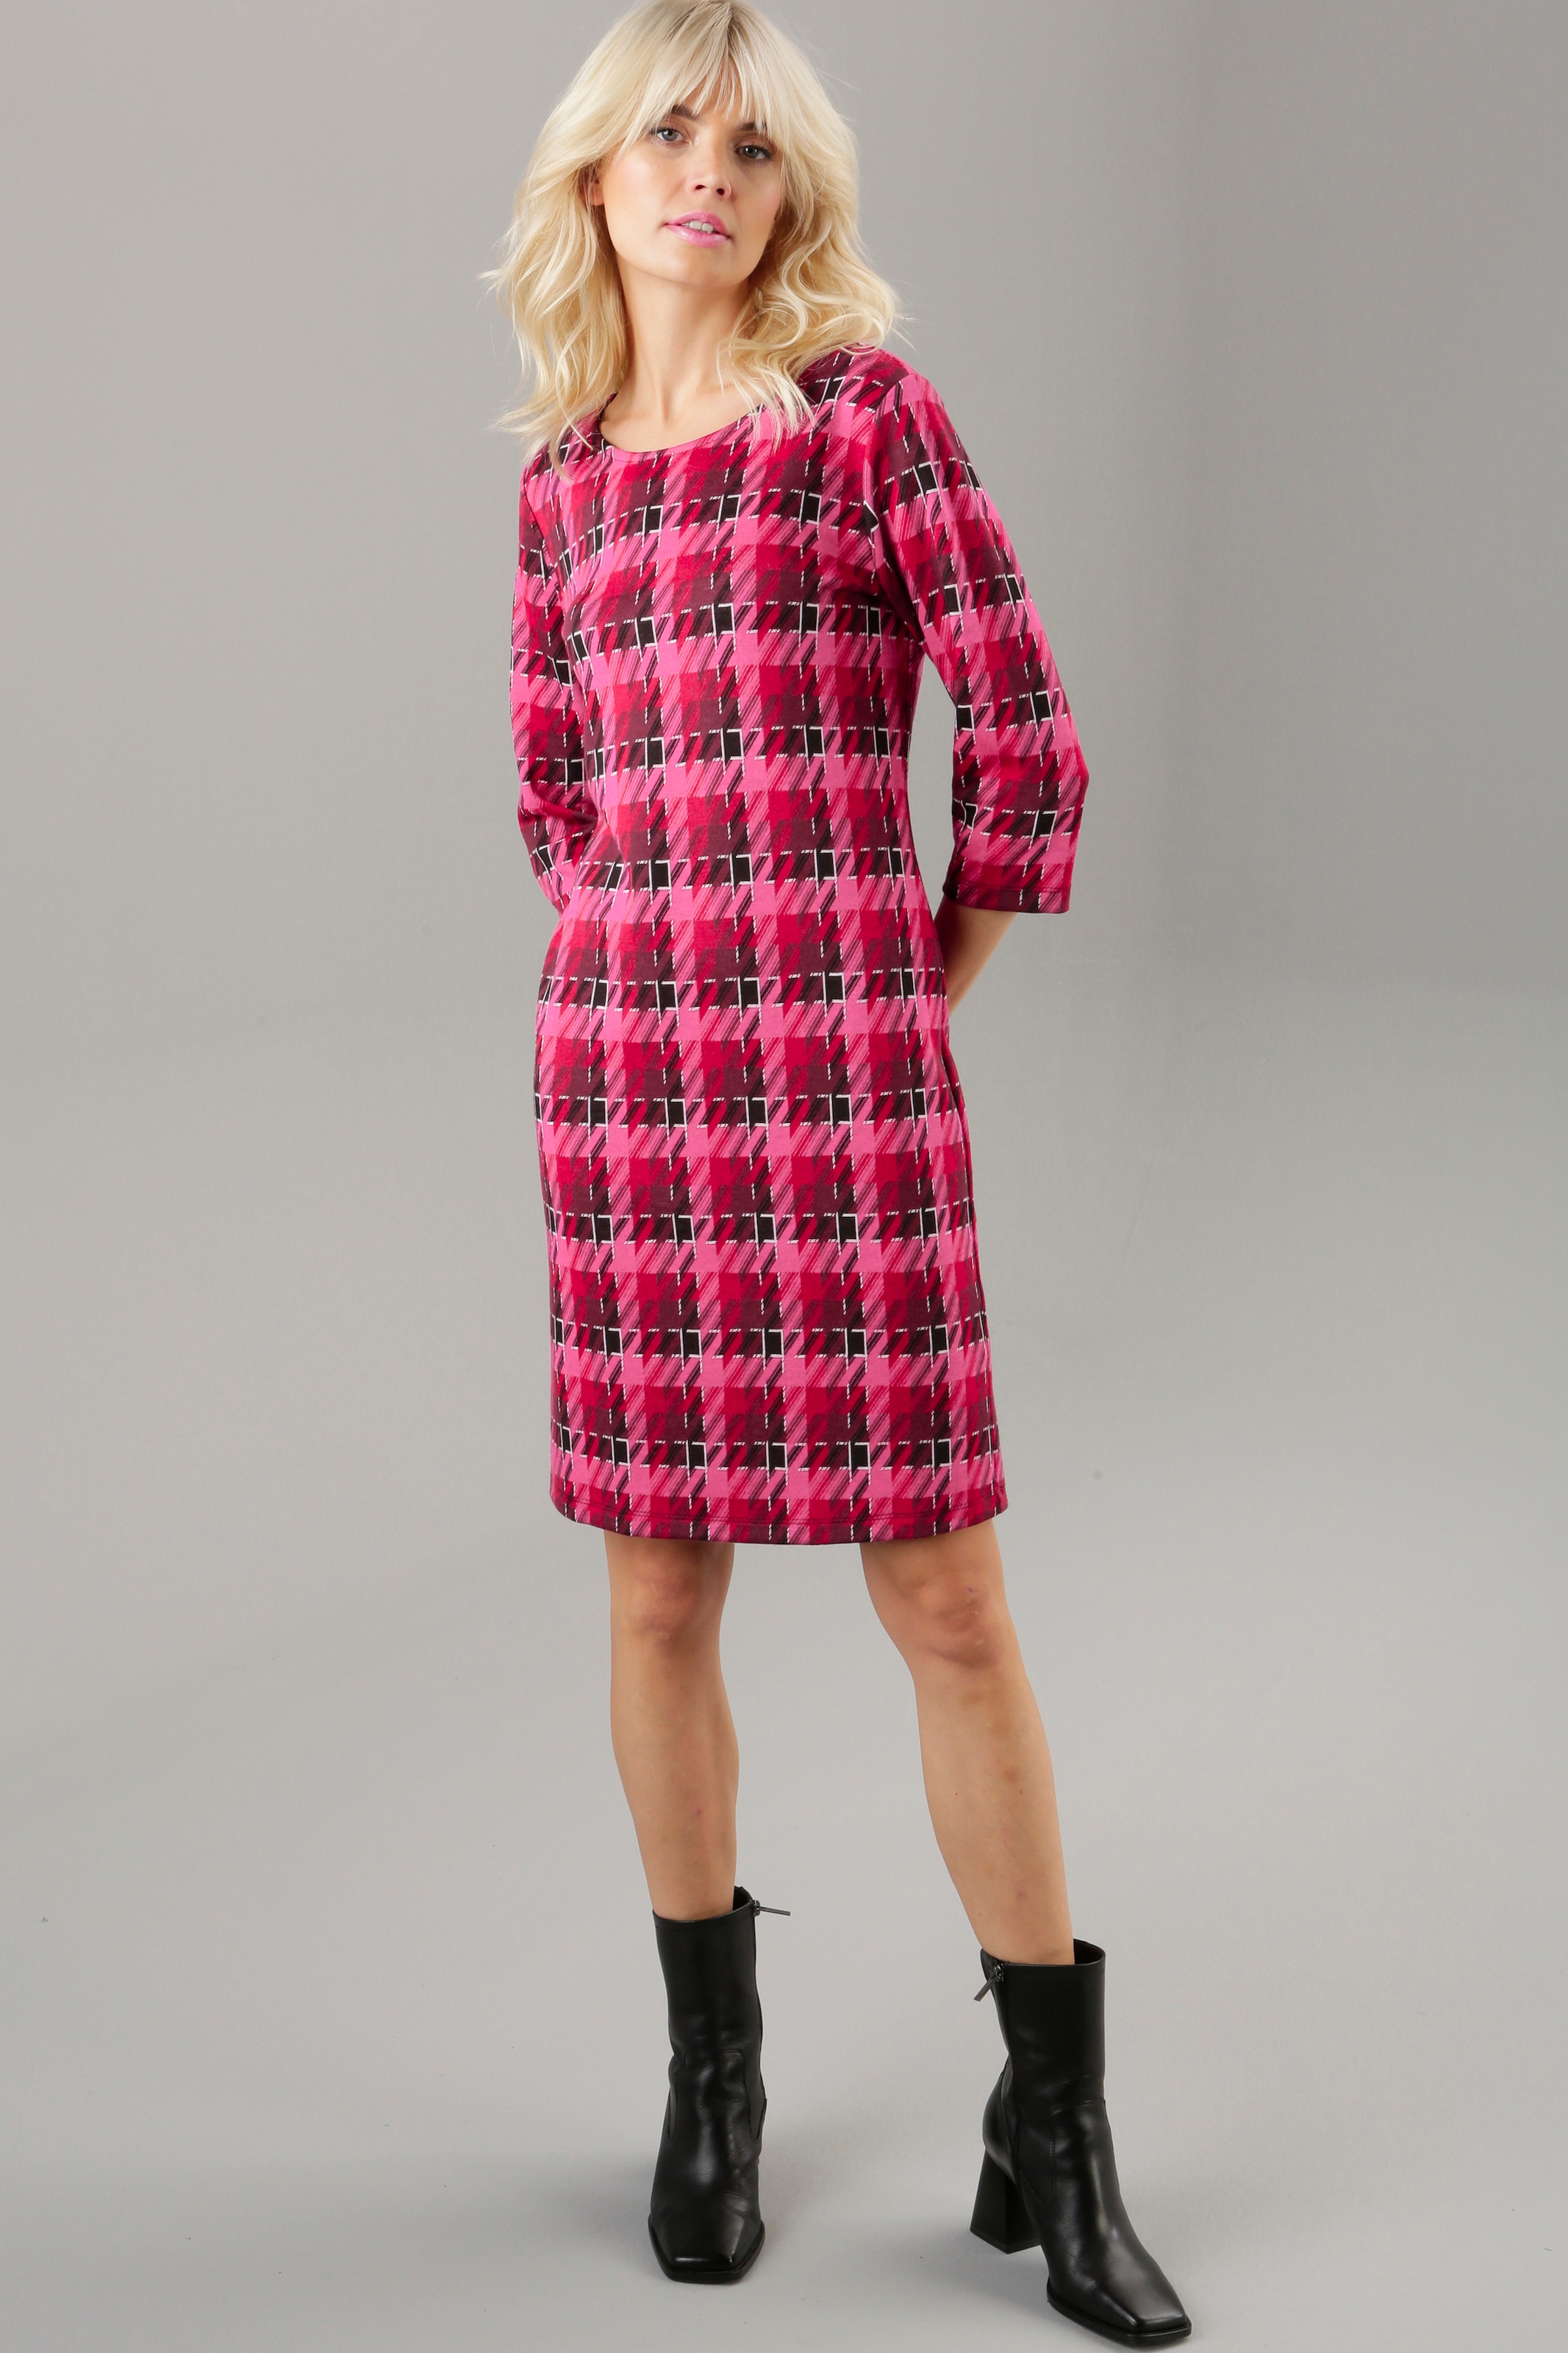 Jerseykleid KOLLEKTION - in Aniston SELECTED Allover-Muster NEUE mit trendy Knallfarben